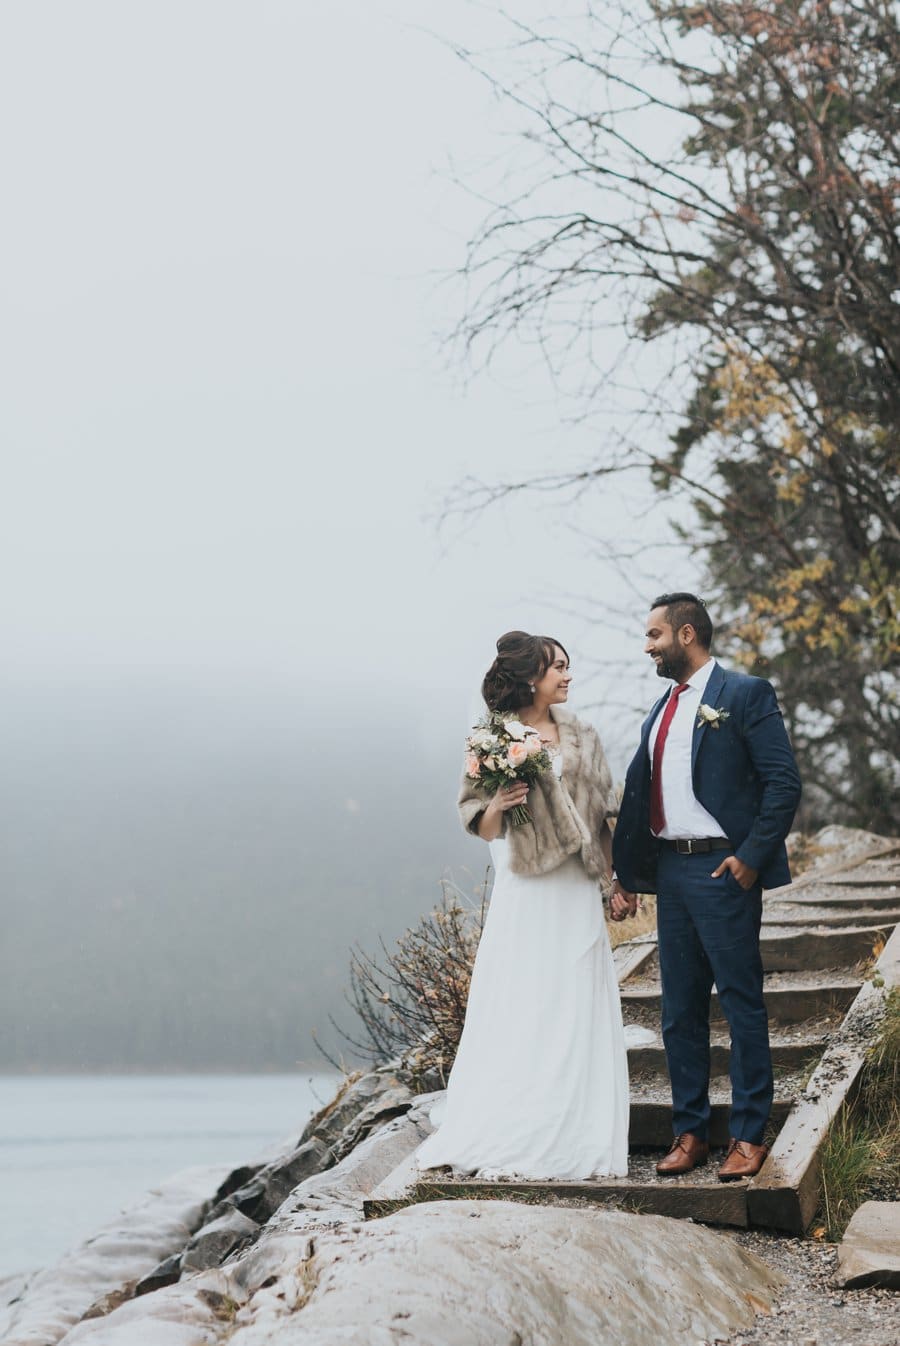 Lake Minnewanka bride & groom portraits in the rain autumn mountain wedding